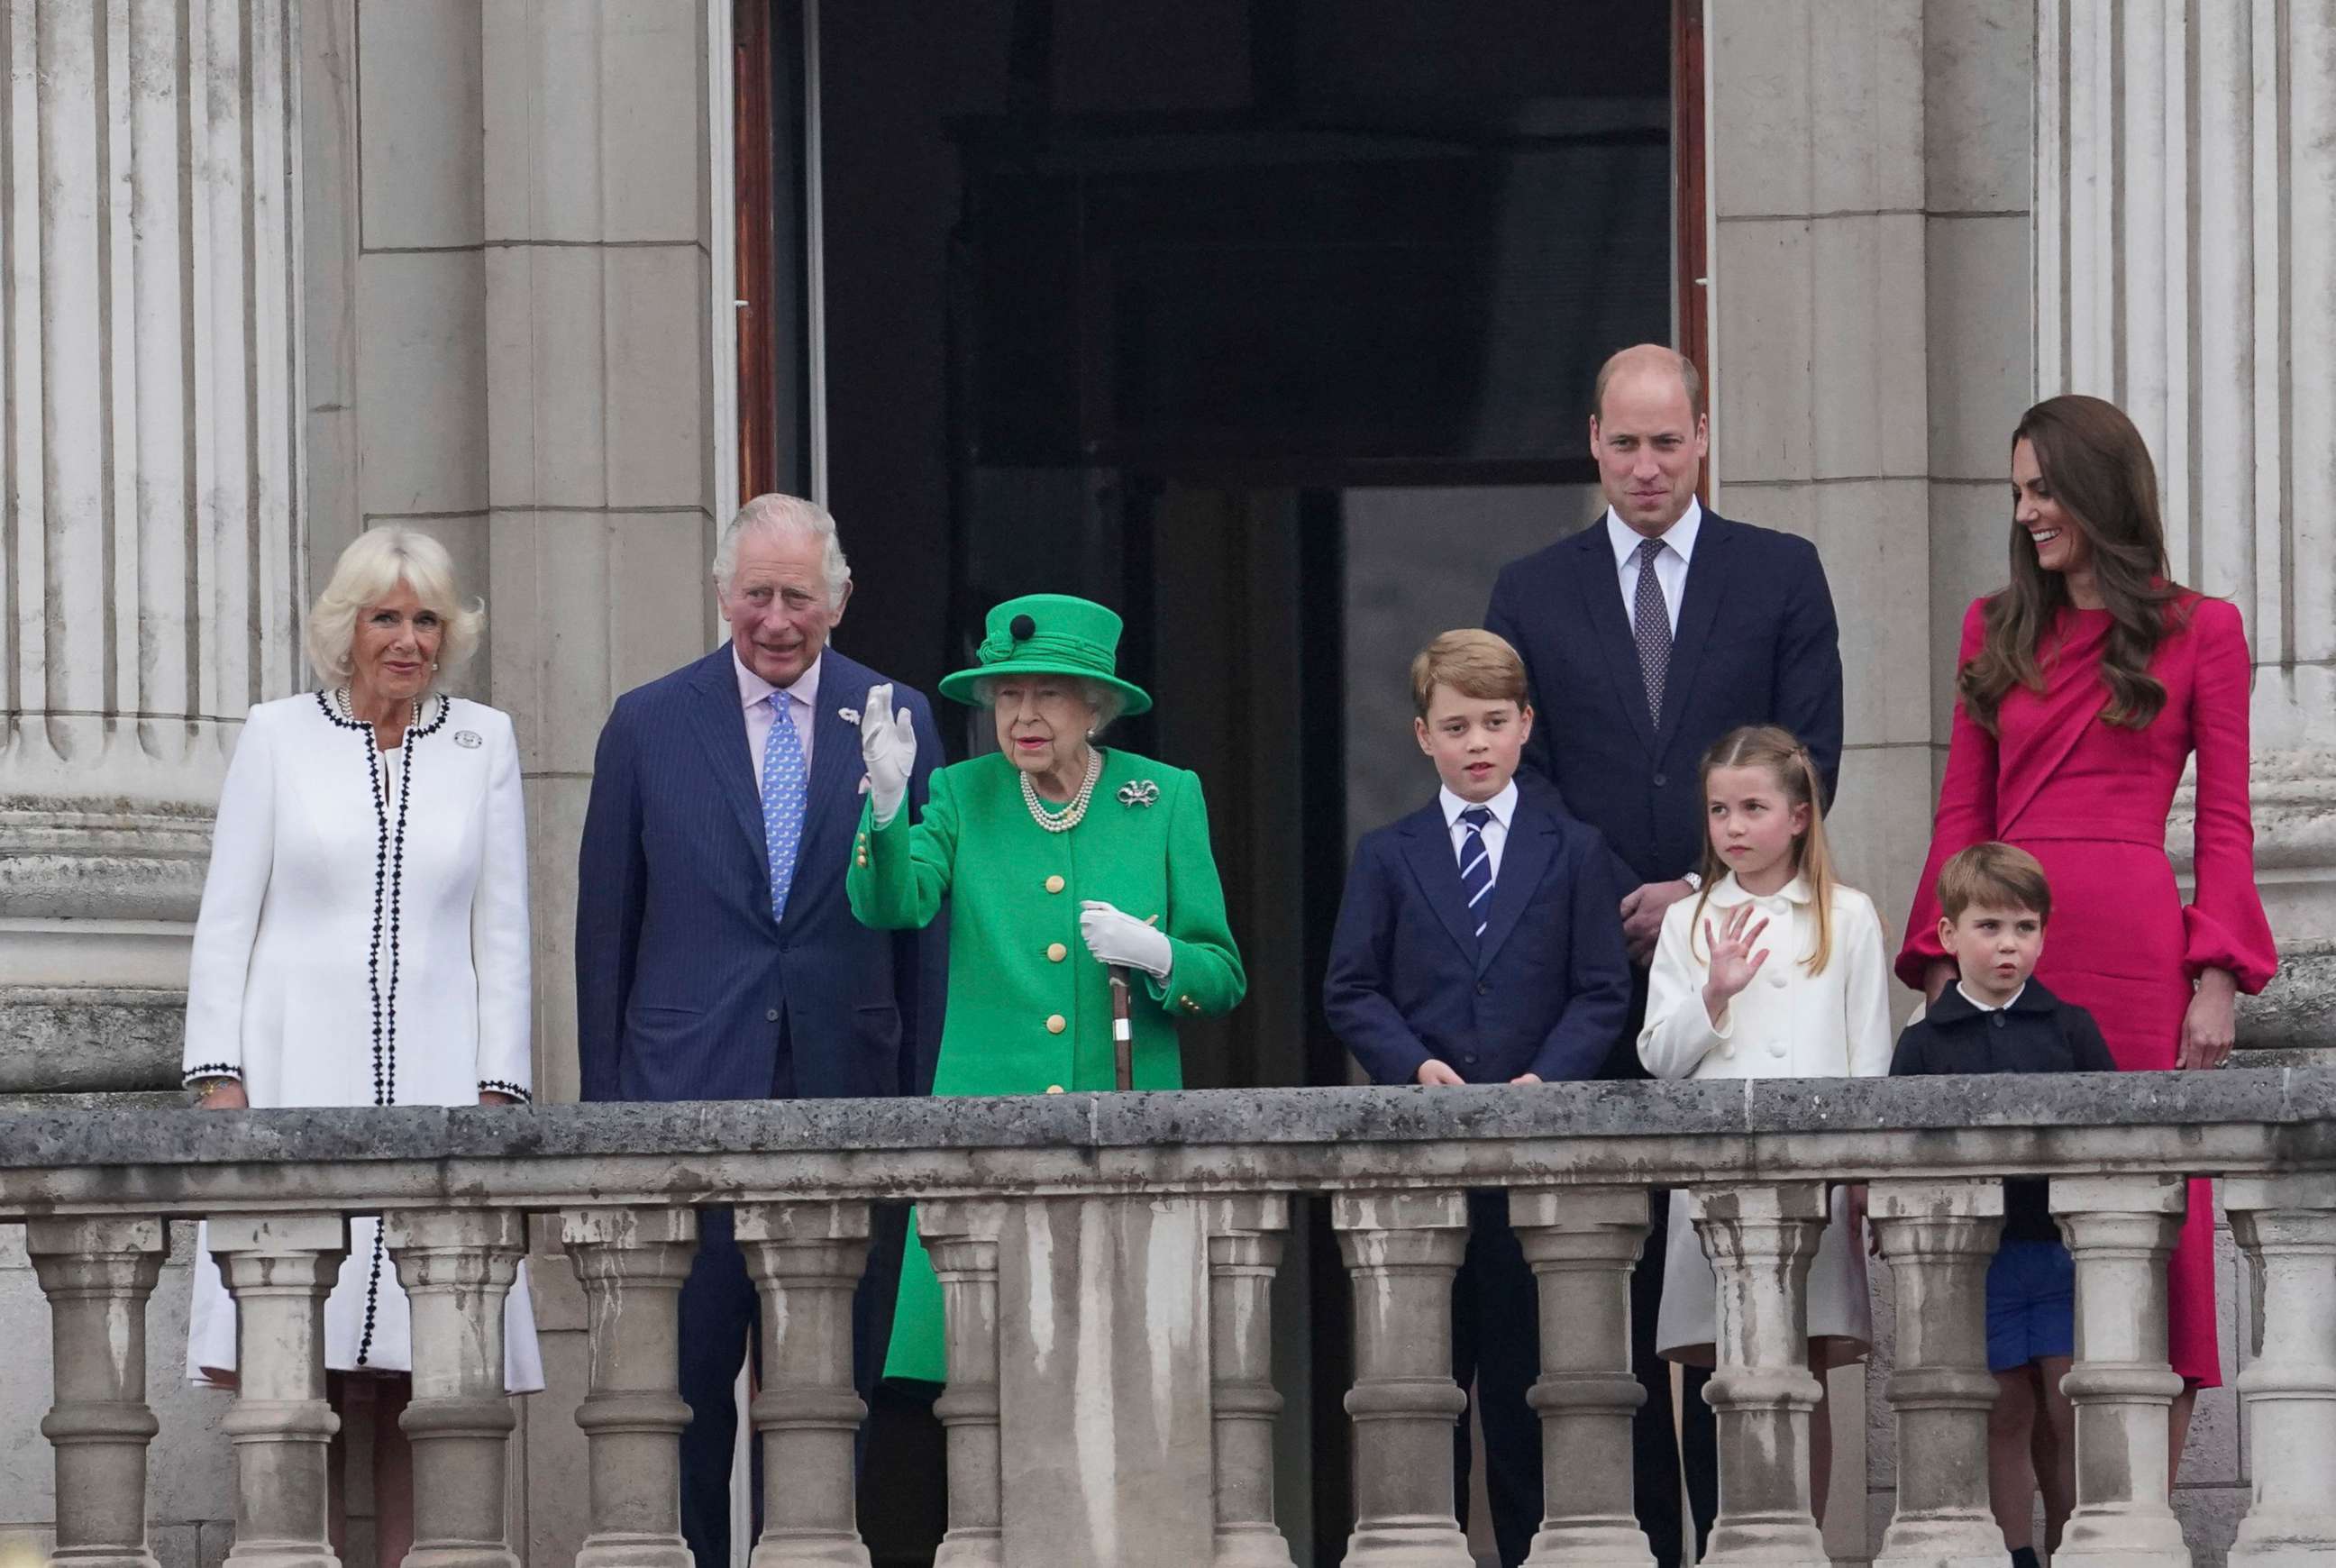 Queen Elizabeth II ends Platinum Jubilee the same way she began